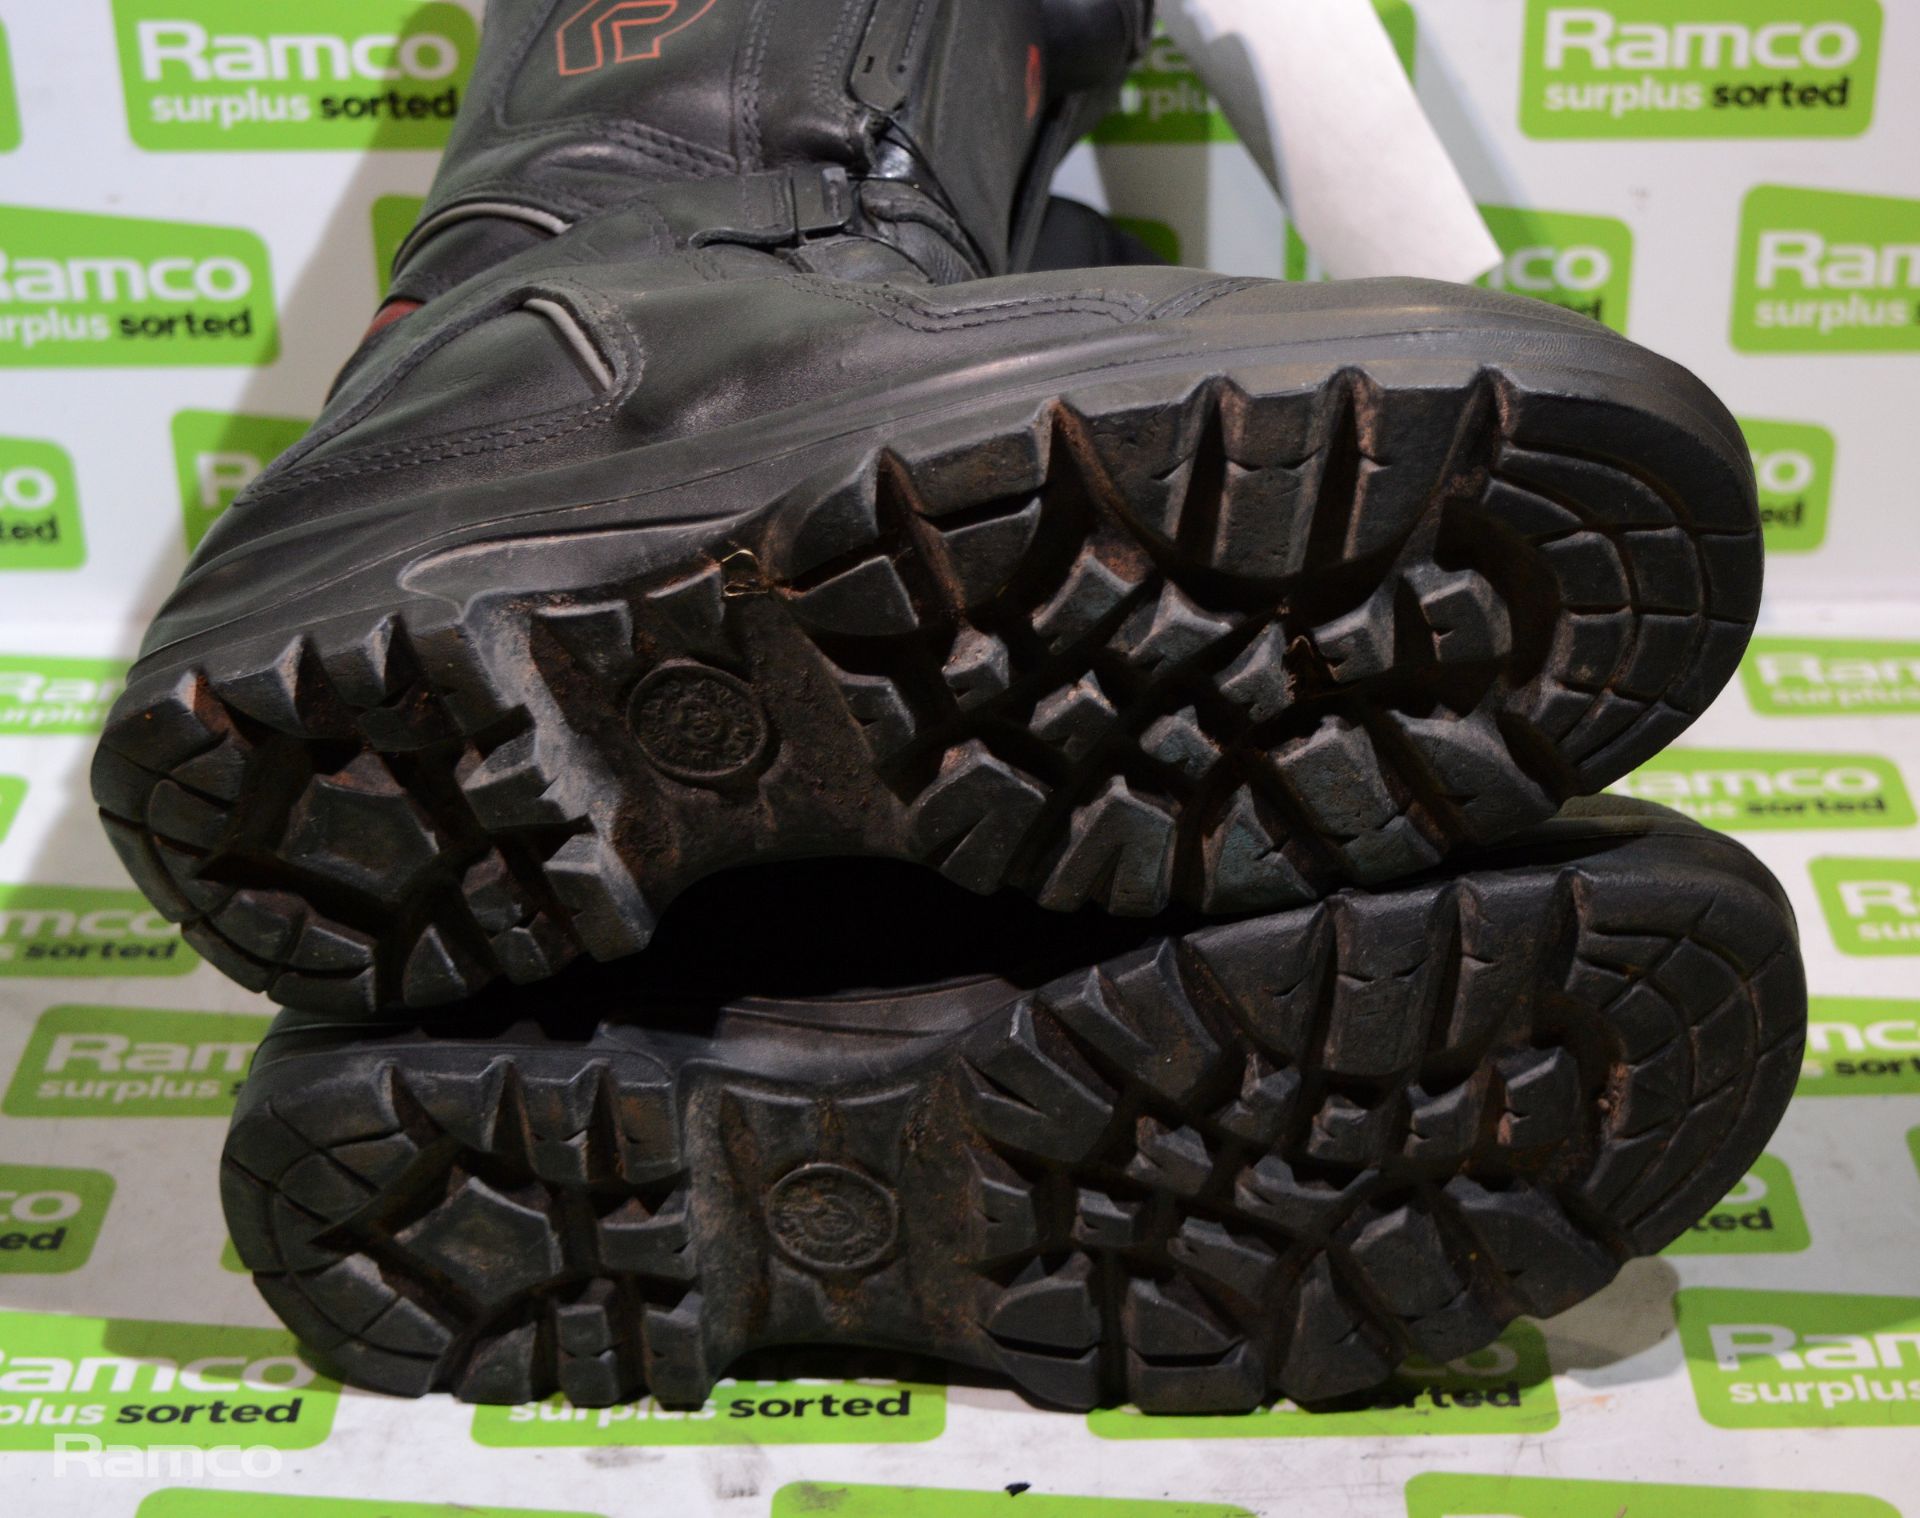 Rosenbauer Sympatex Fire & Heat Resistant Boots Pair - Size: EU 42, UK 8 - 30x30x40cm - Image 3 of 3